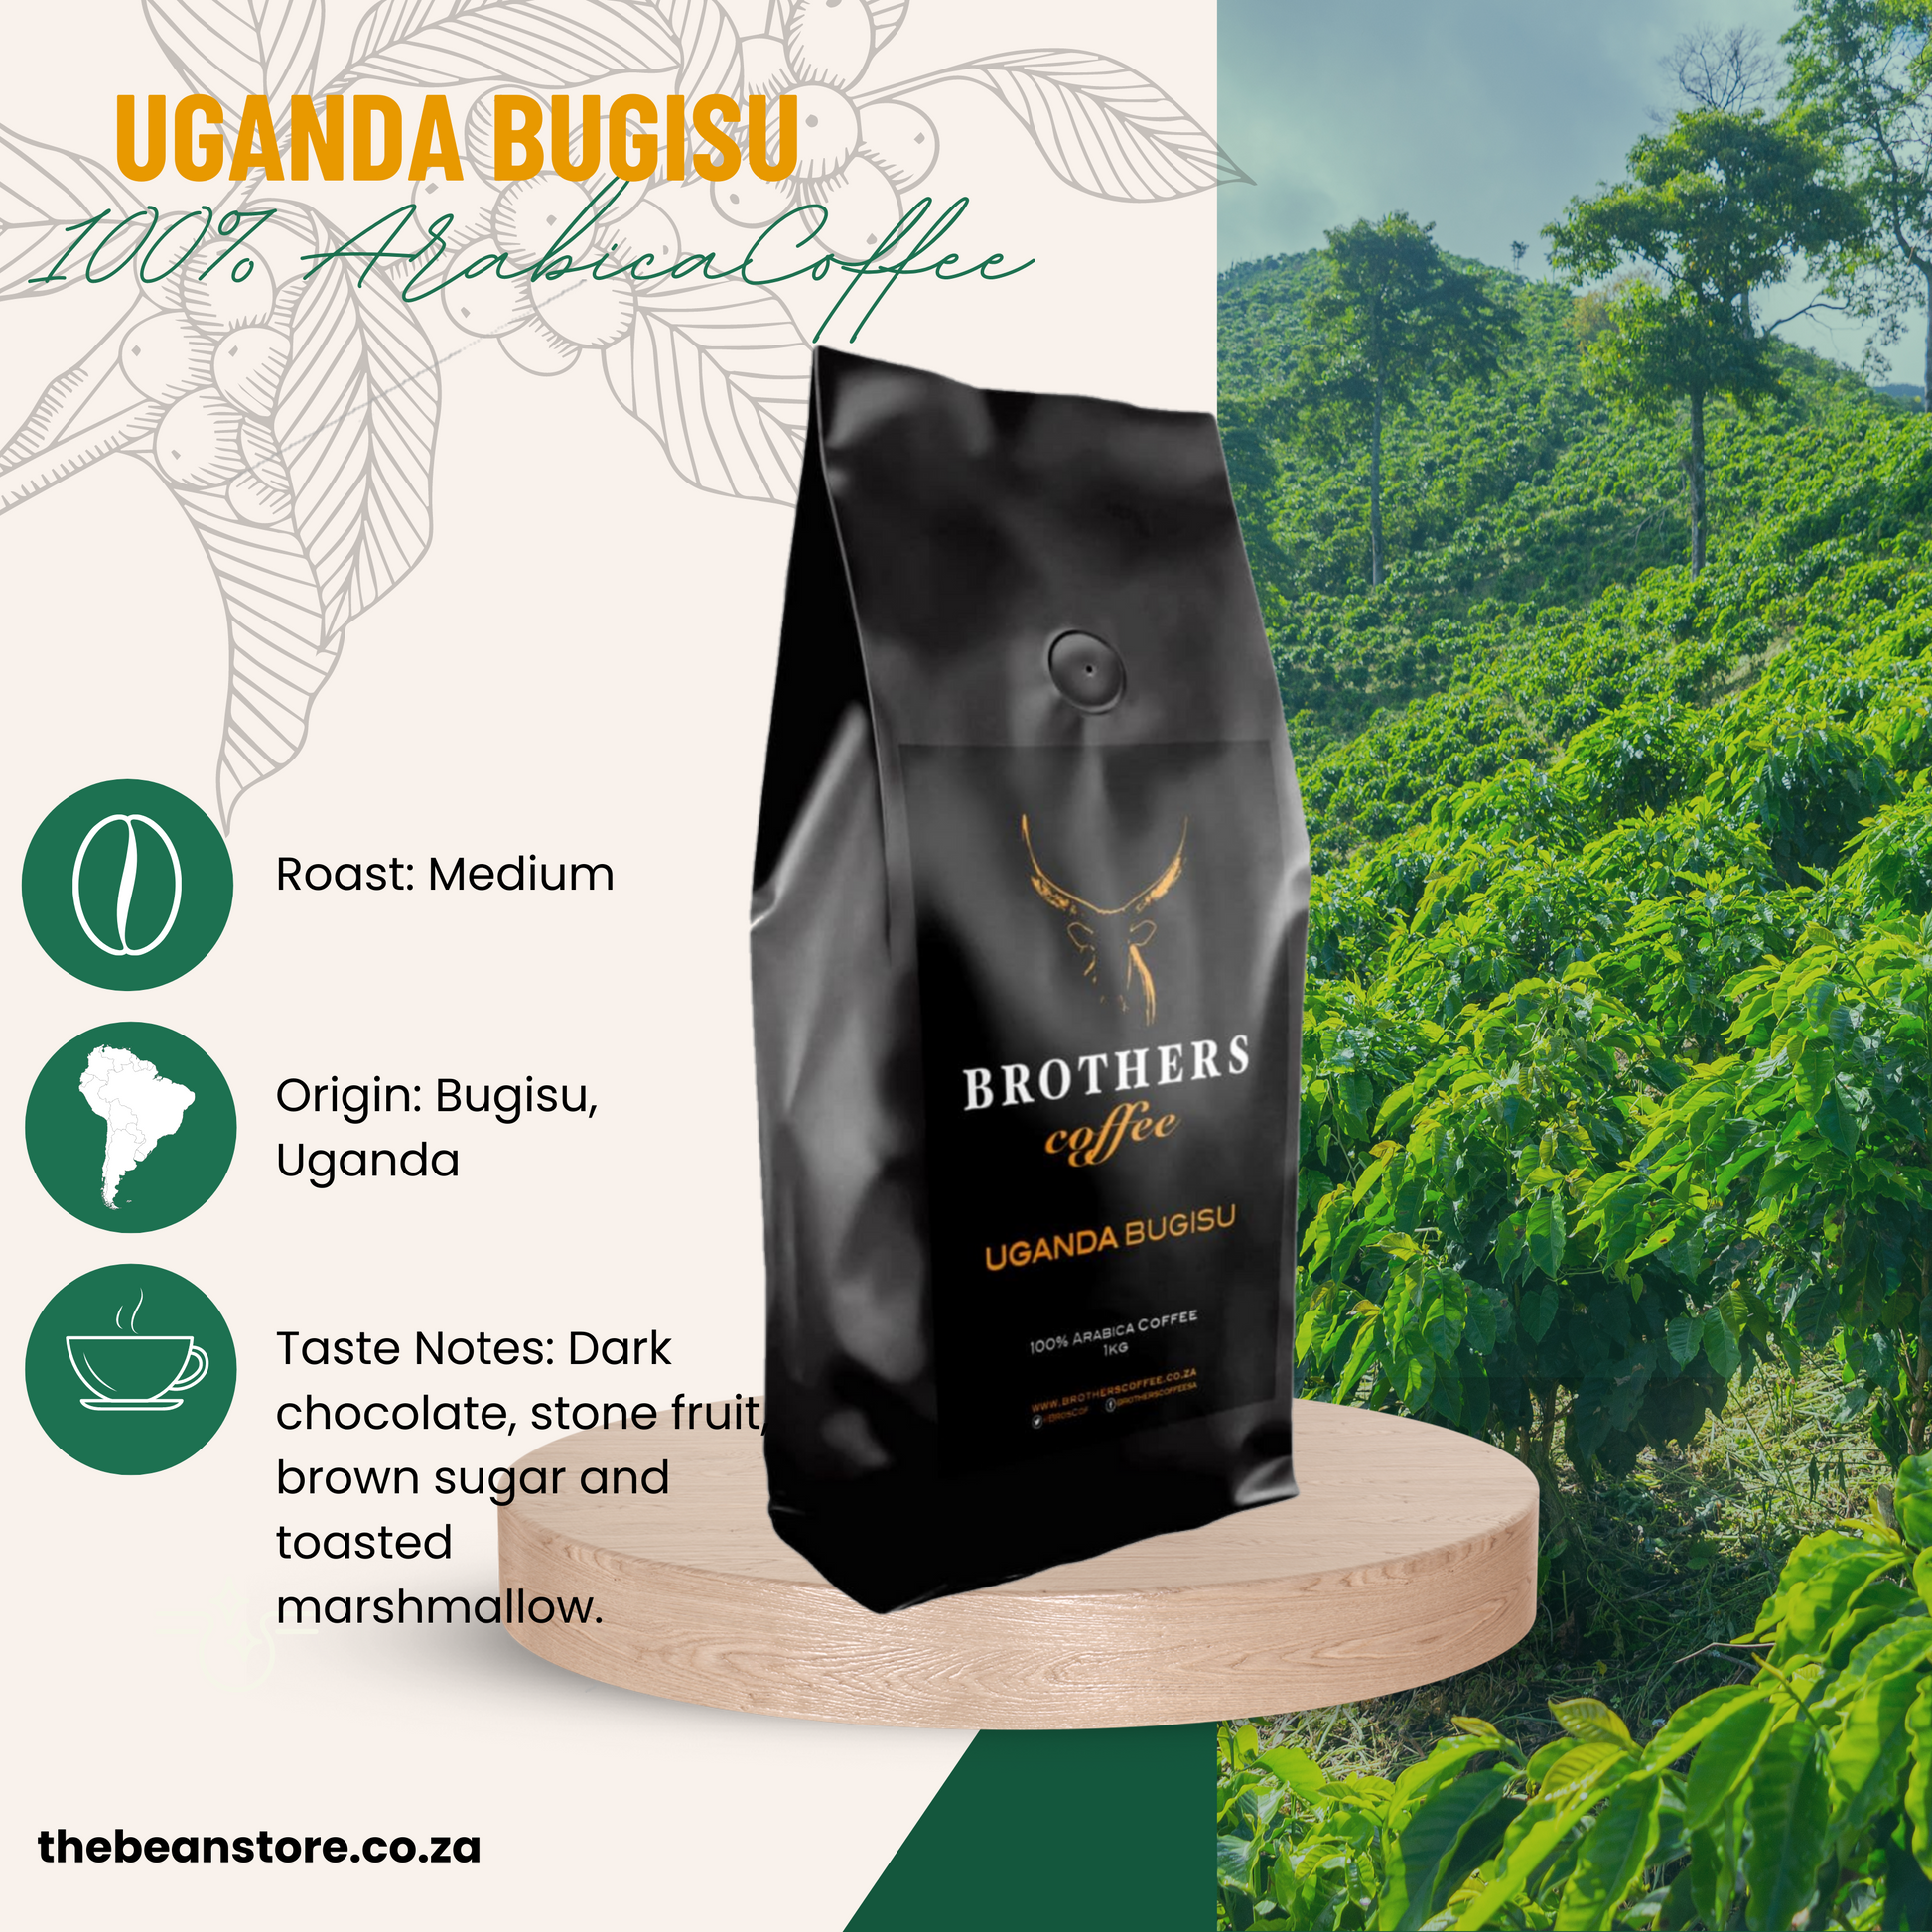 Buy Uganda Bugisu Coffee Online - #1 Best Seller